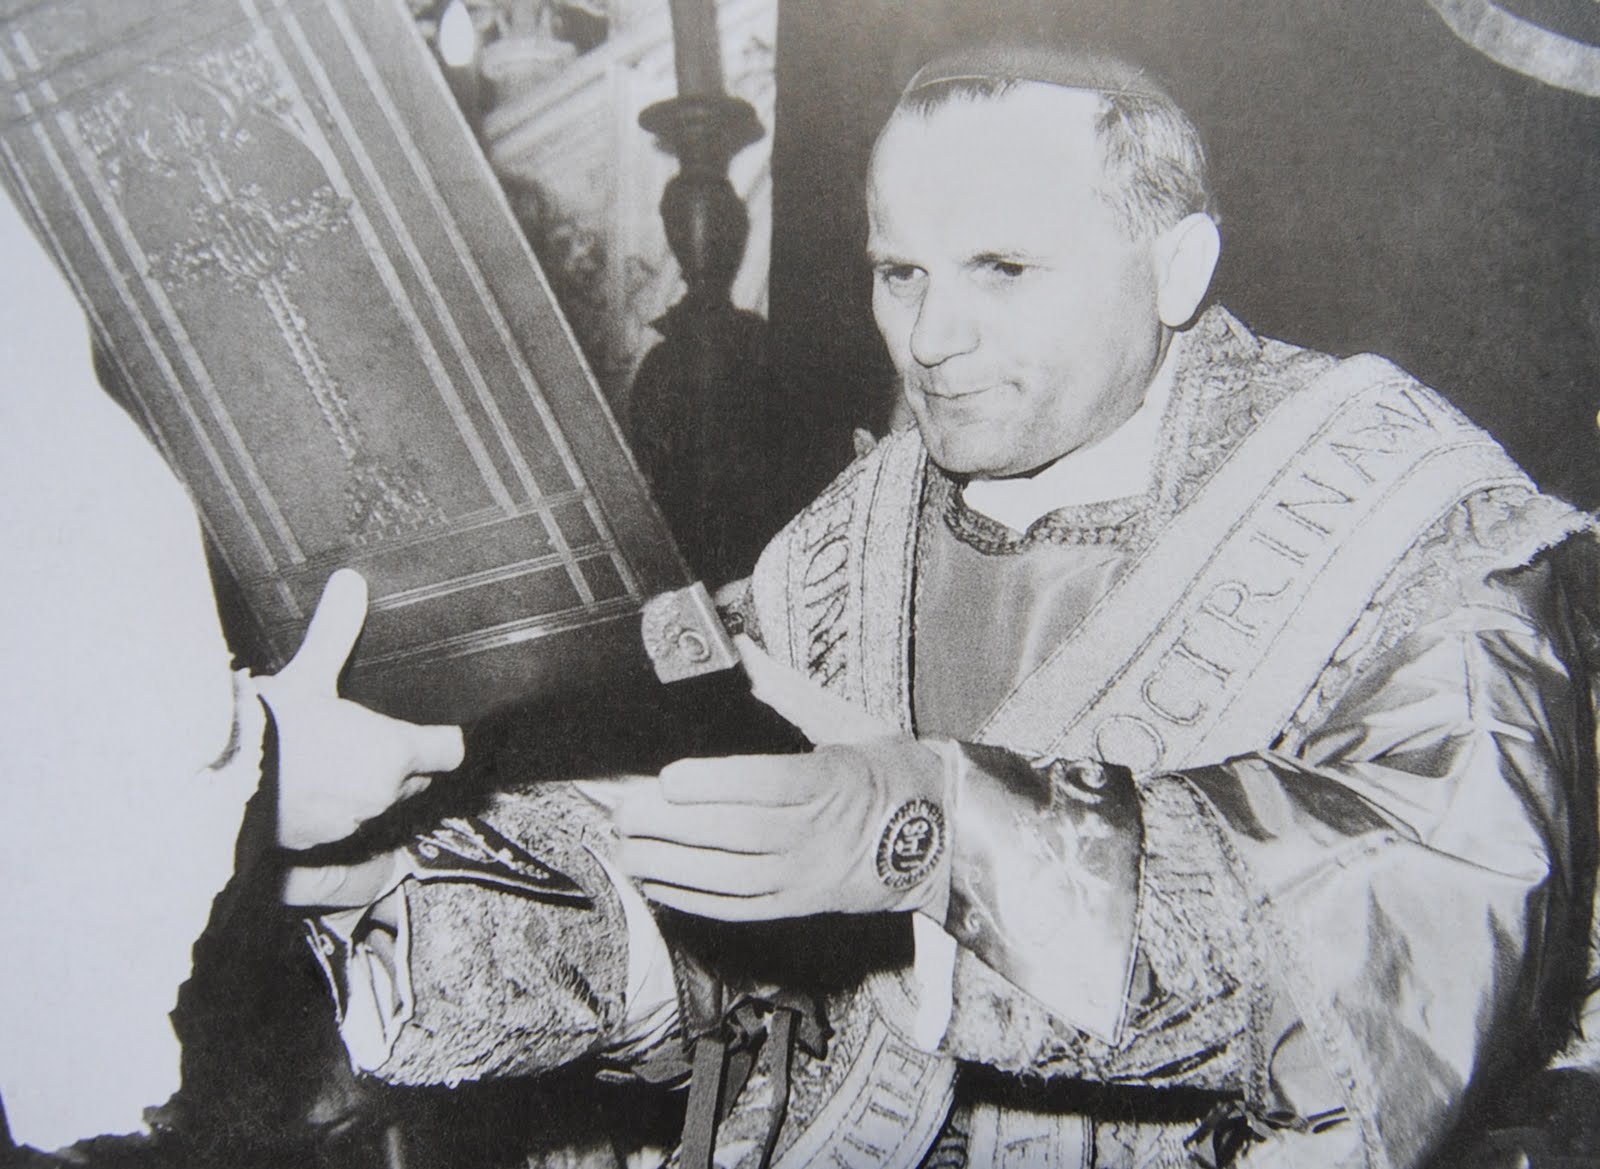 1964: Karol Wojtyla Becomes Archbishop of Krakow